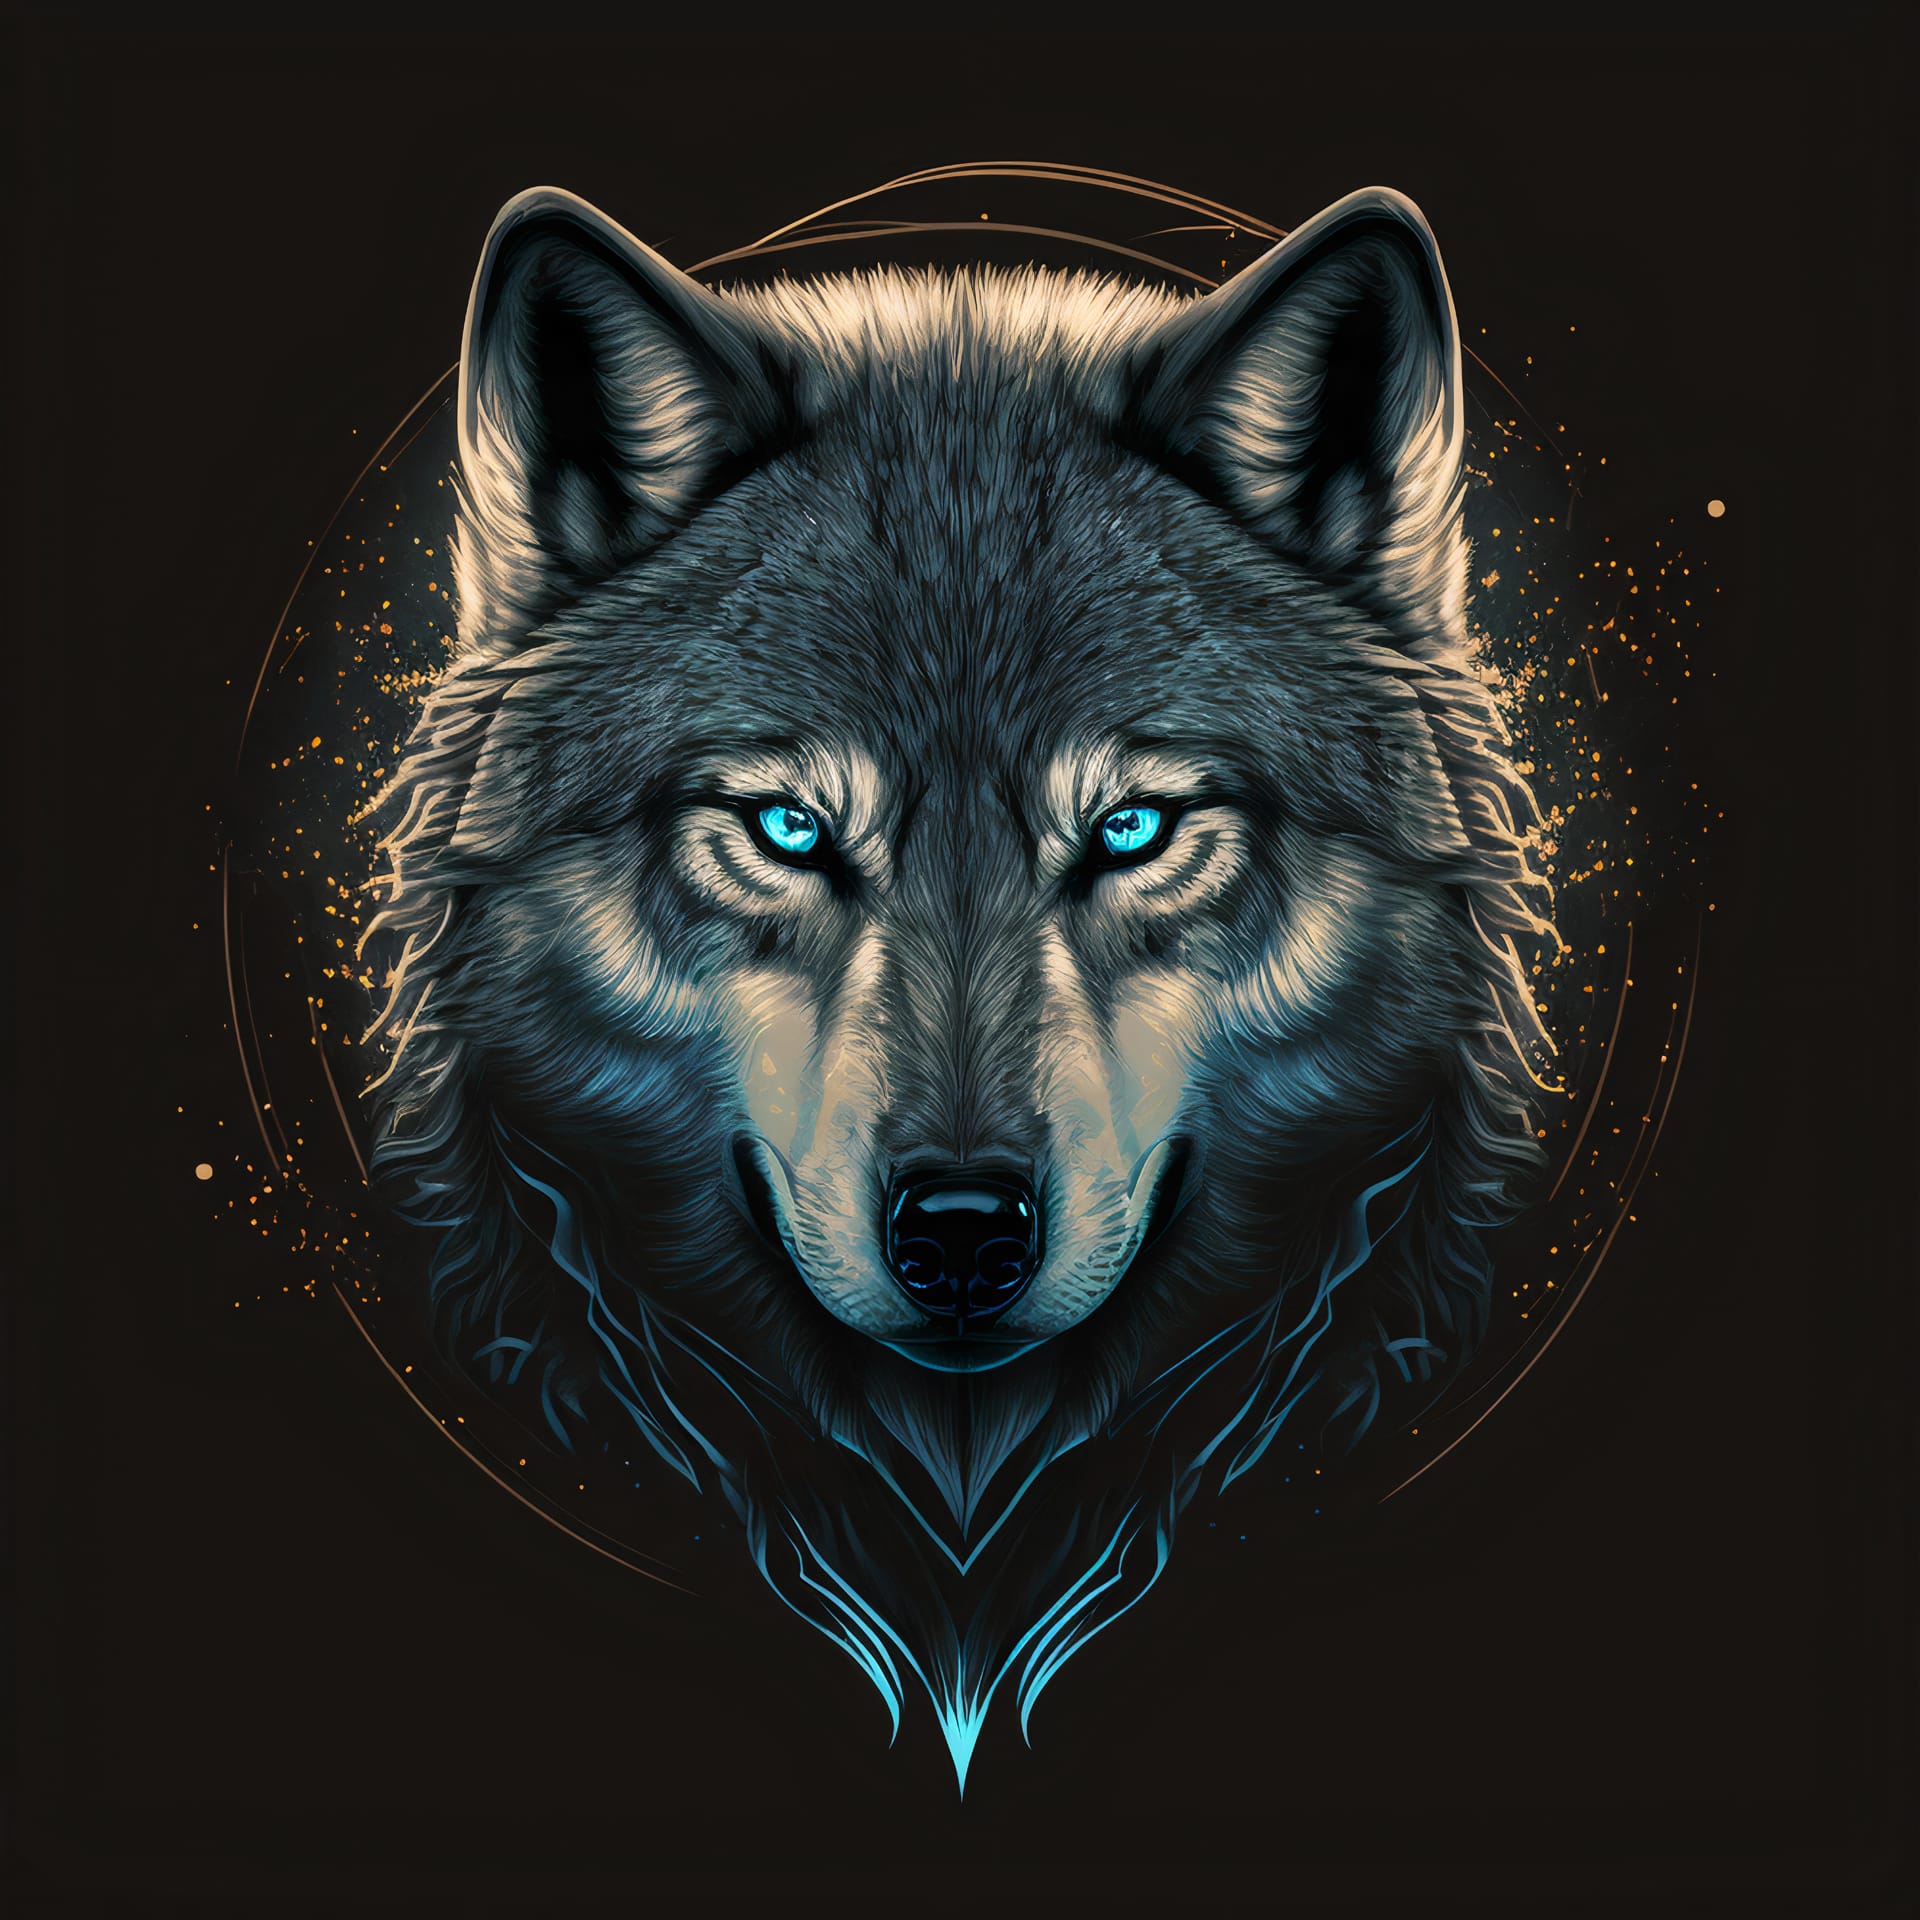 Illustration front view wolf head stunningly beautiful design